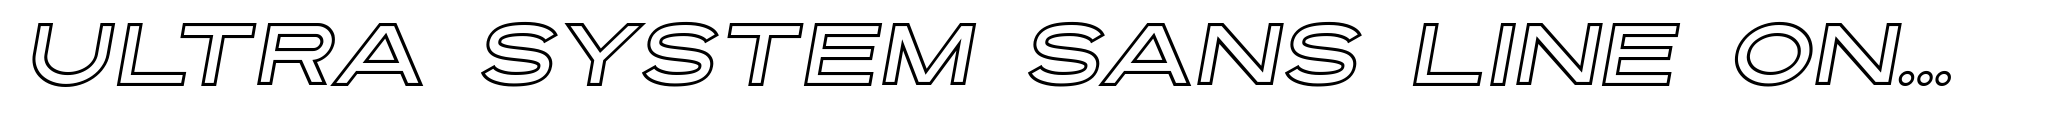 Ultra System Sans Line One Italic image